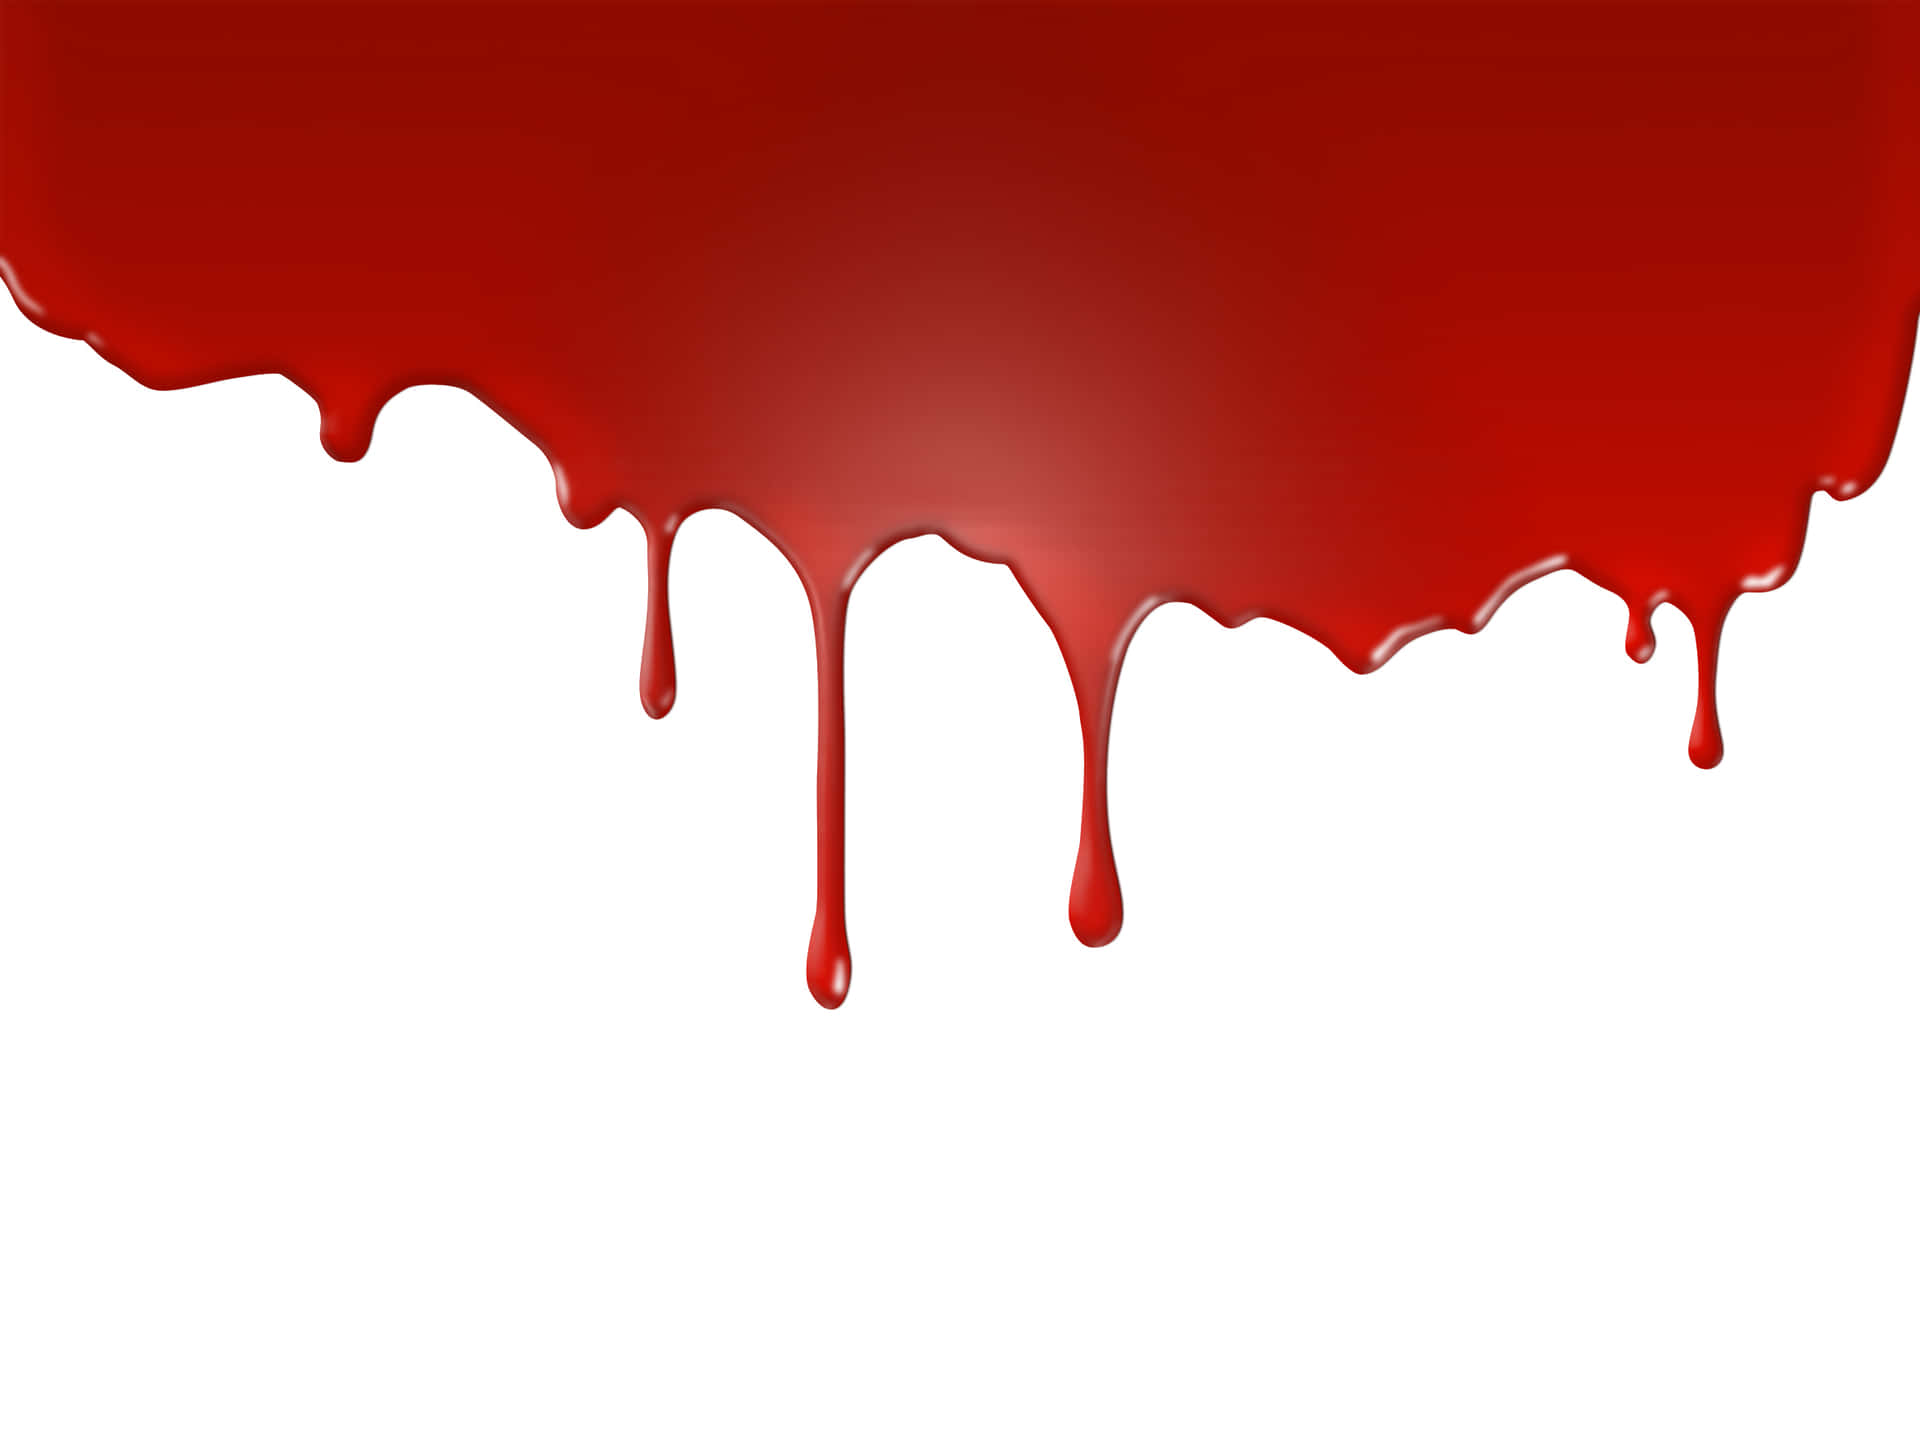 Download Blood Aesthetic Wallpaper